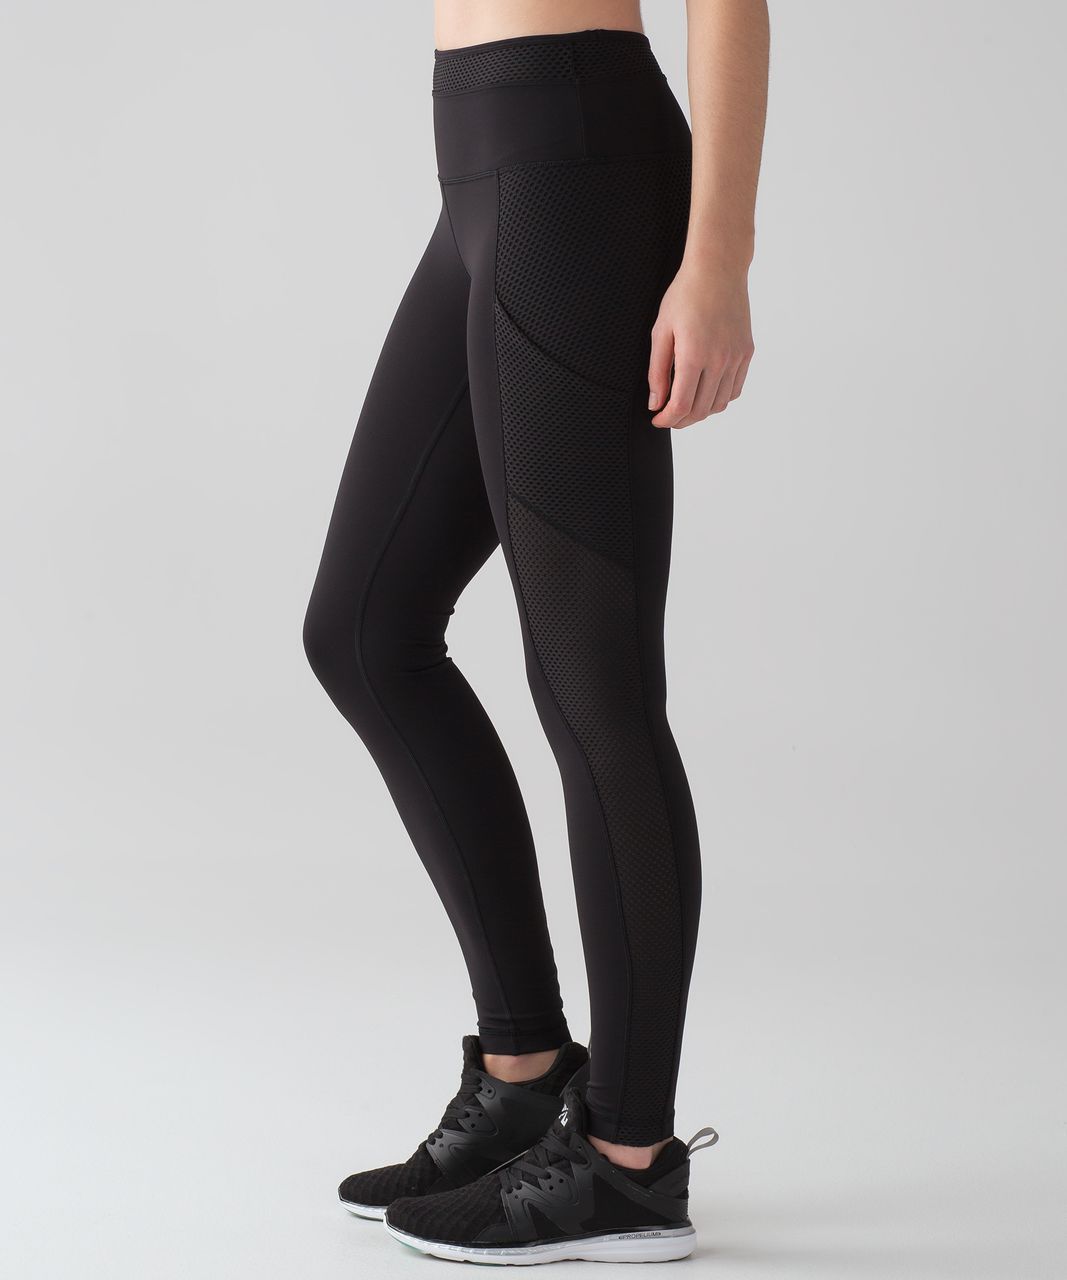 lululemon black leggings with pockets